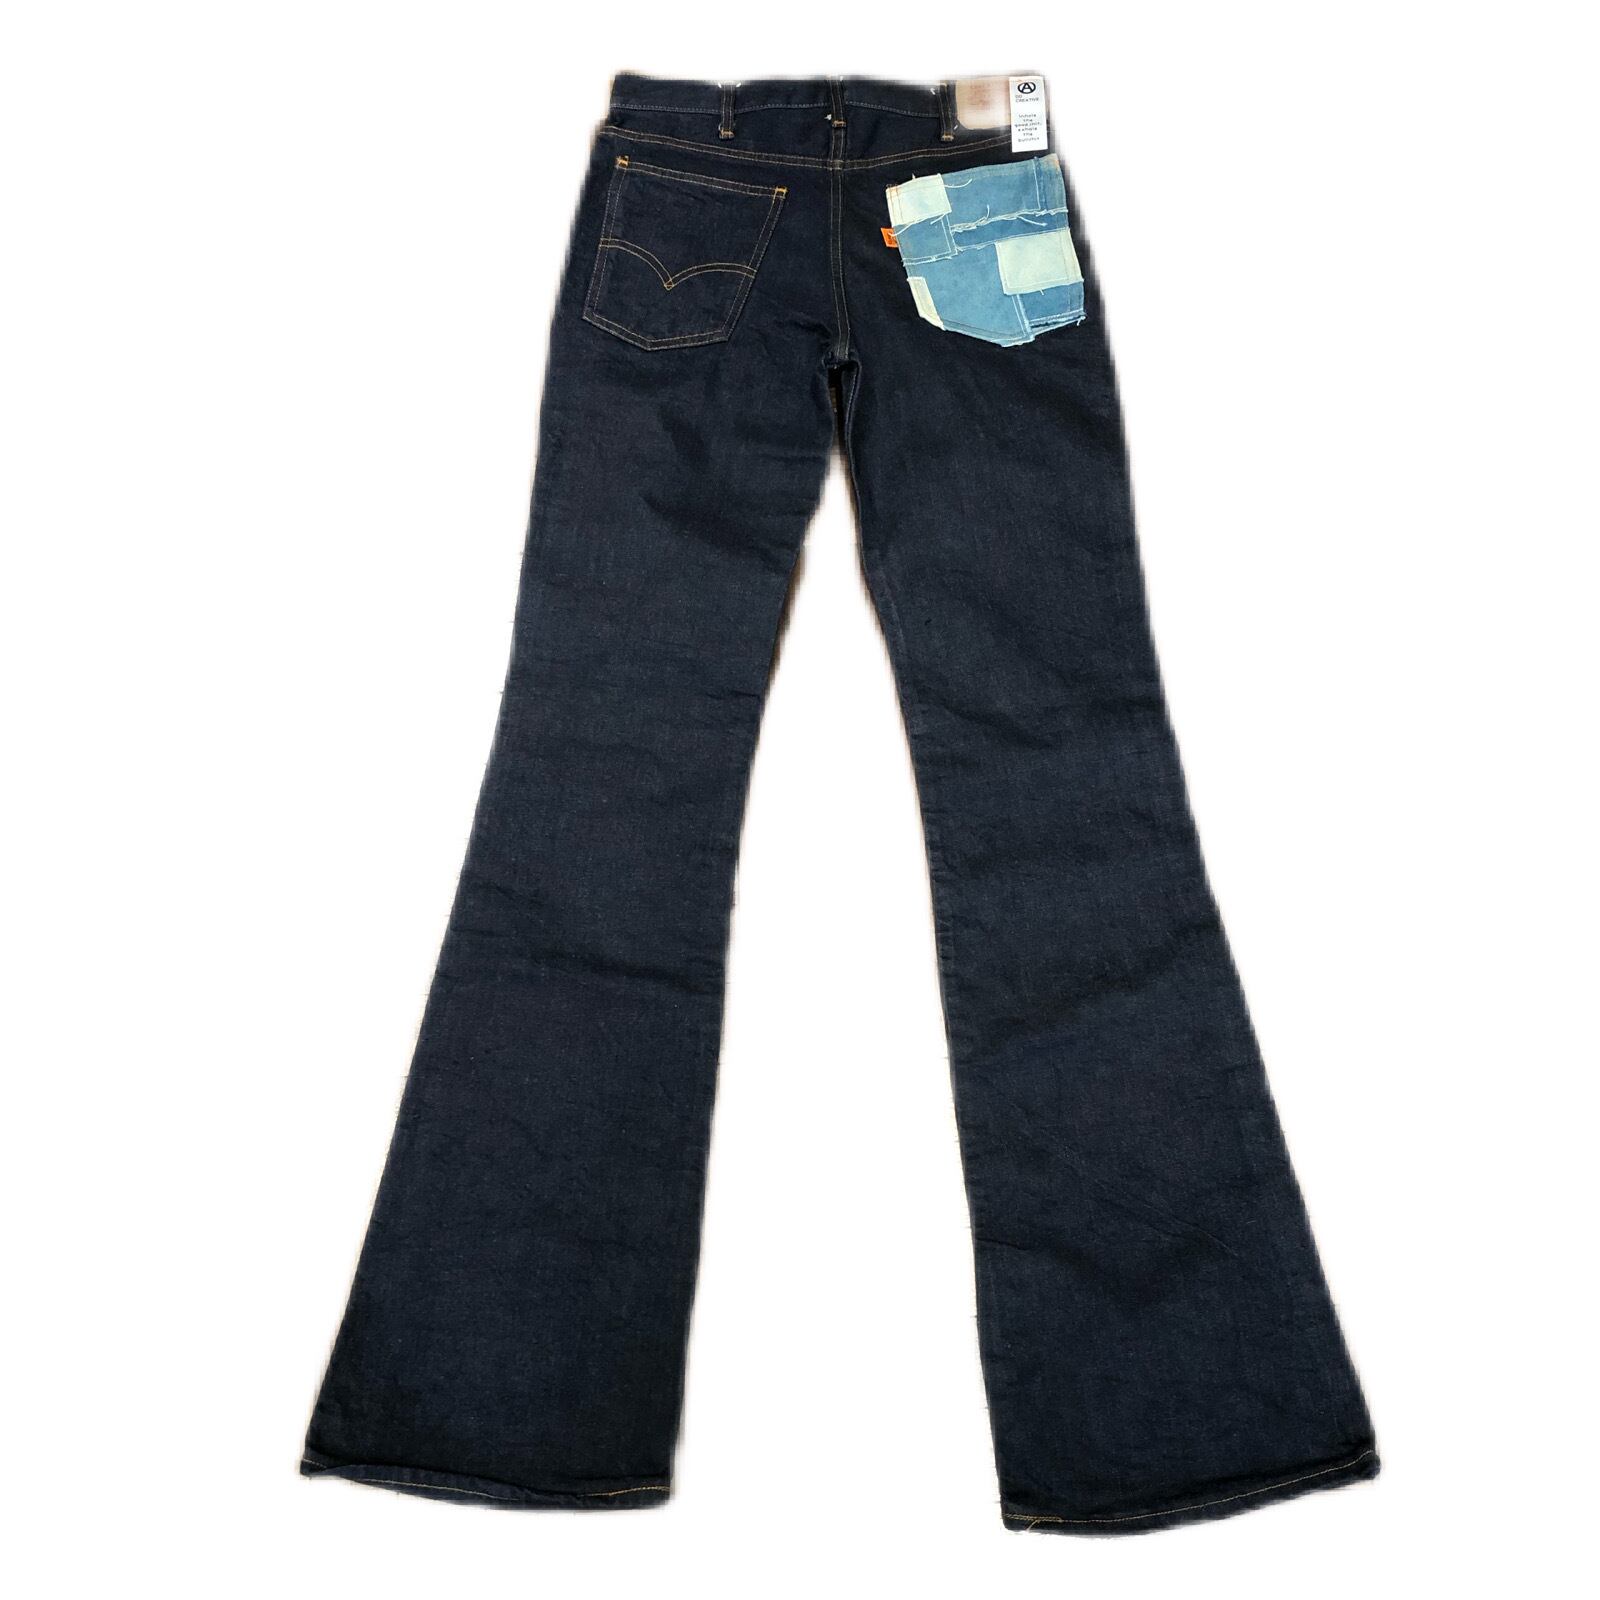 Levi's remake flare jeans (Blue color)maisonma